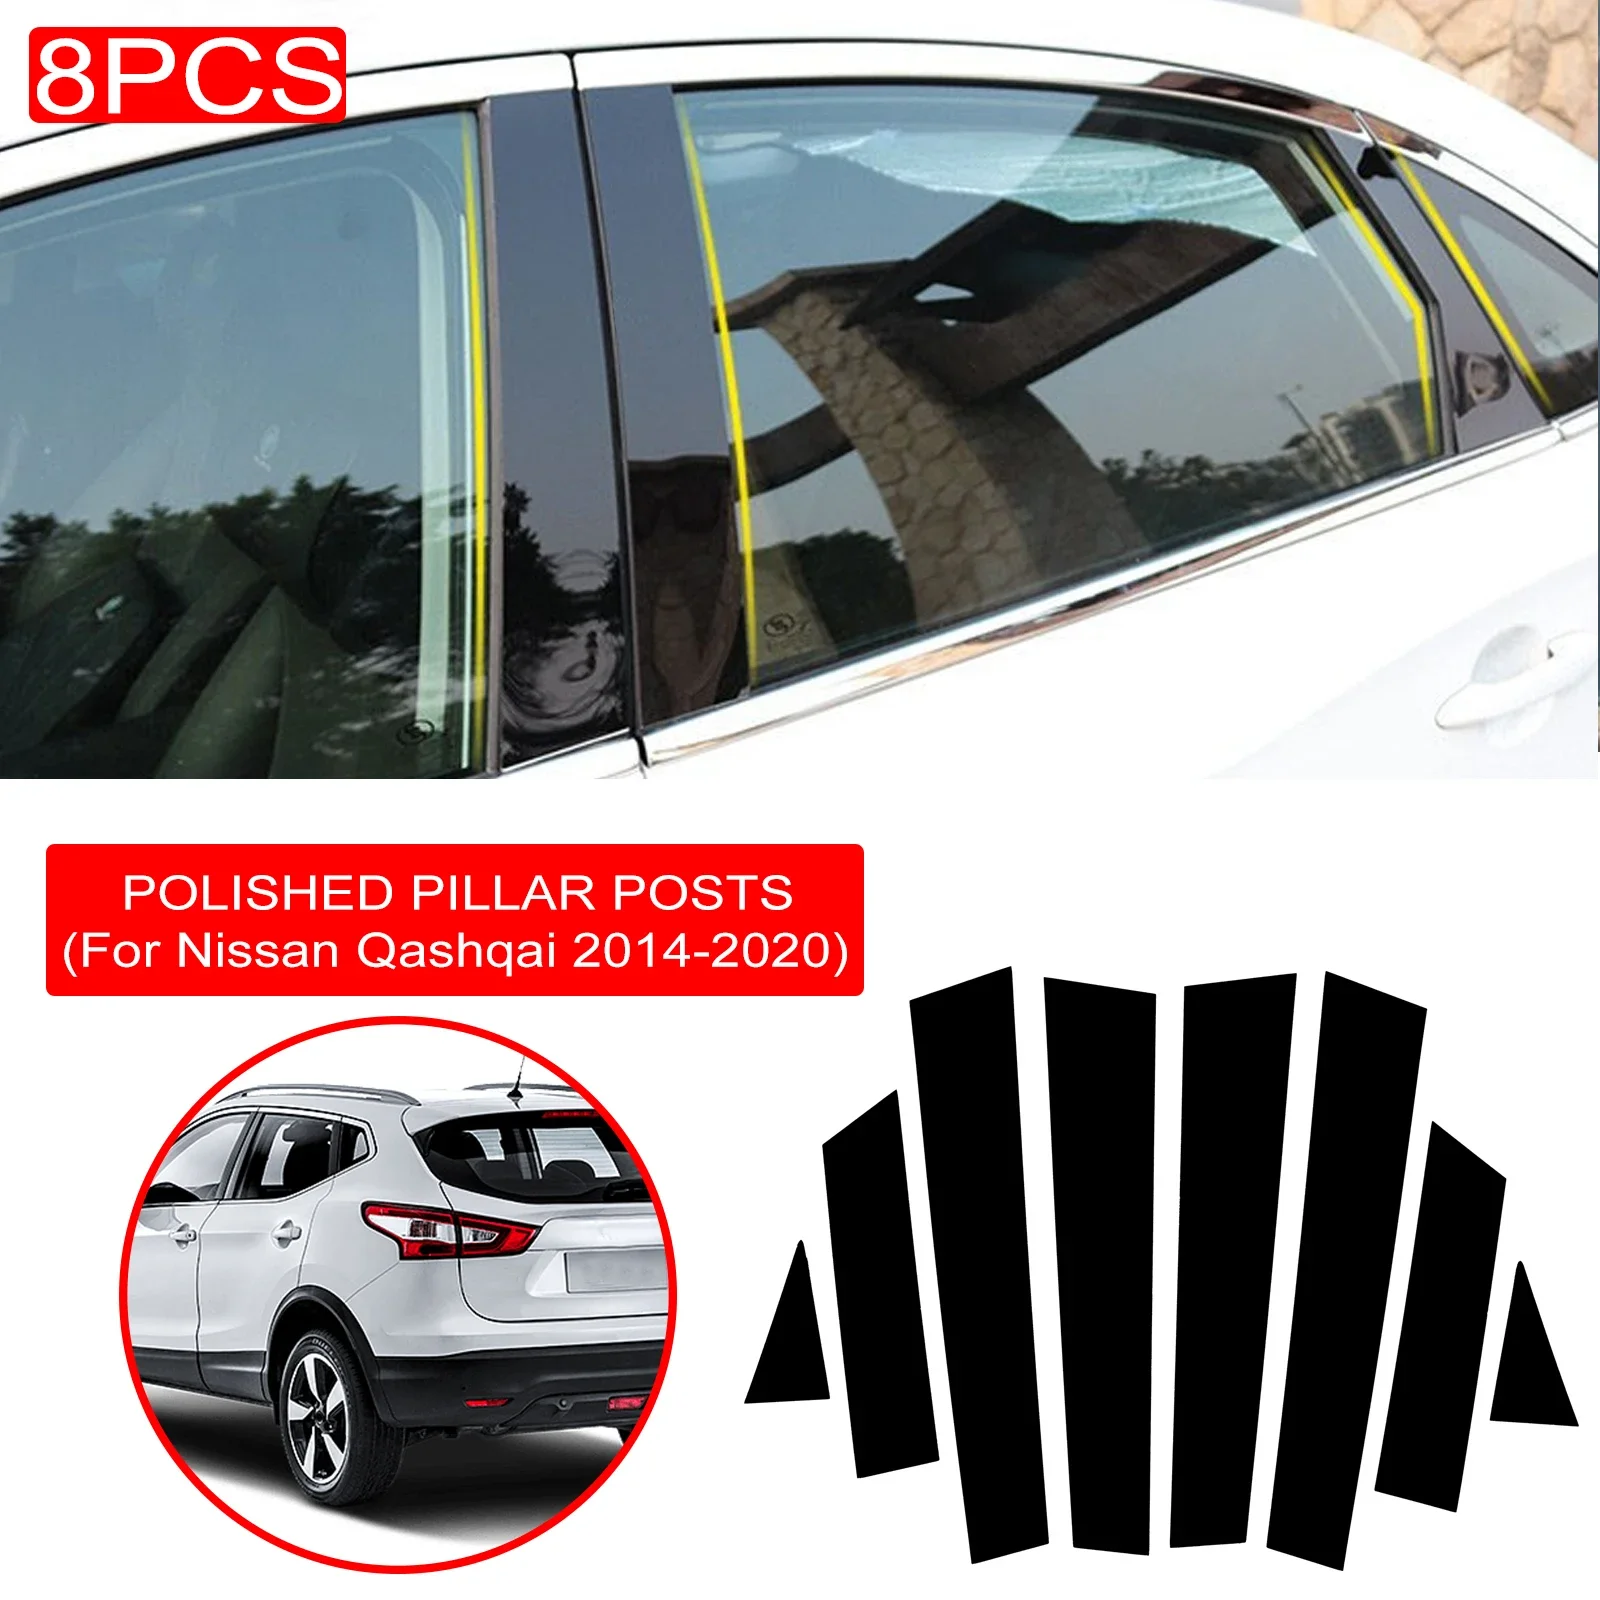 

8PCS Polished Pillar Posts Fit For Nissan Qashqai 2014-2020 Car Window Trim Cover BC Column Sticker Chromium Styling